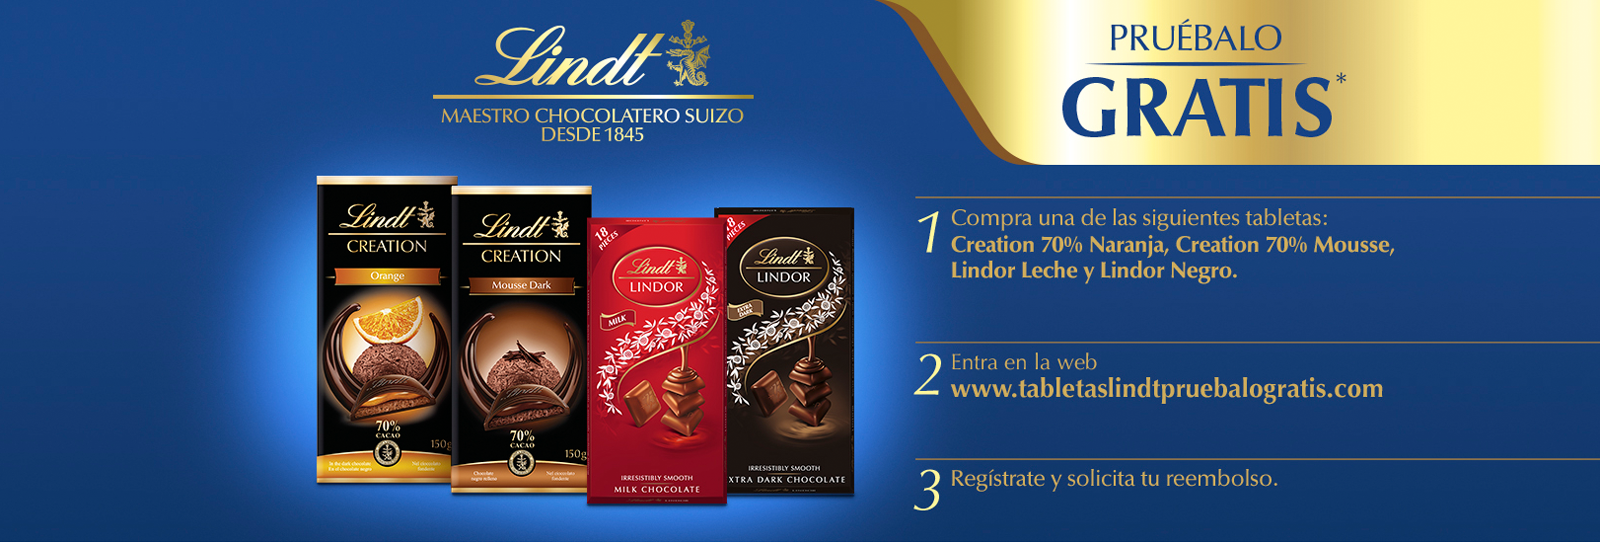 Prueba gratis el chocolate Lindt